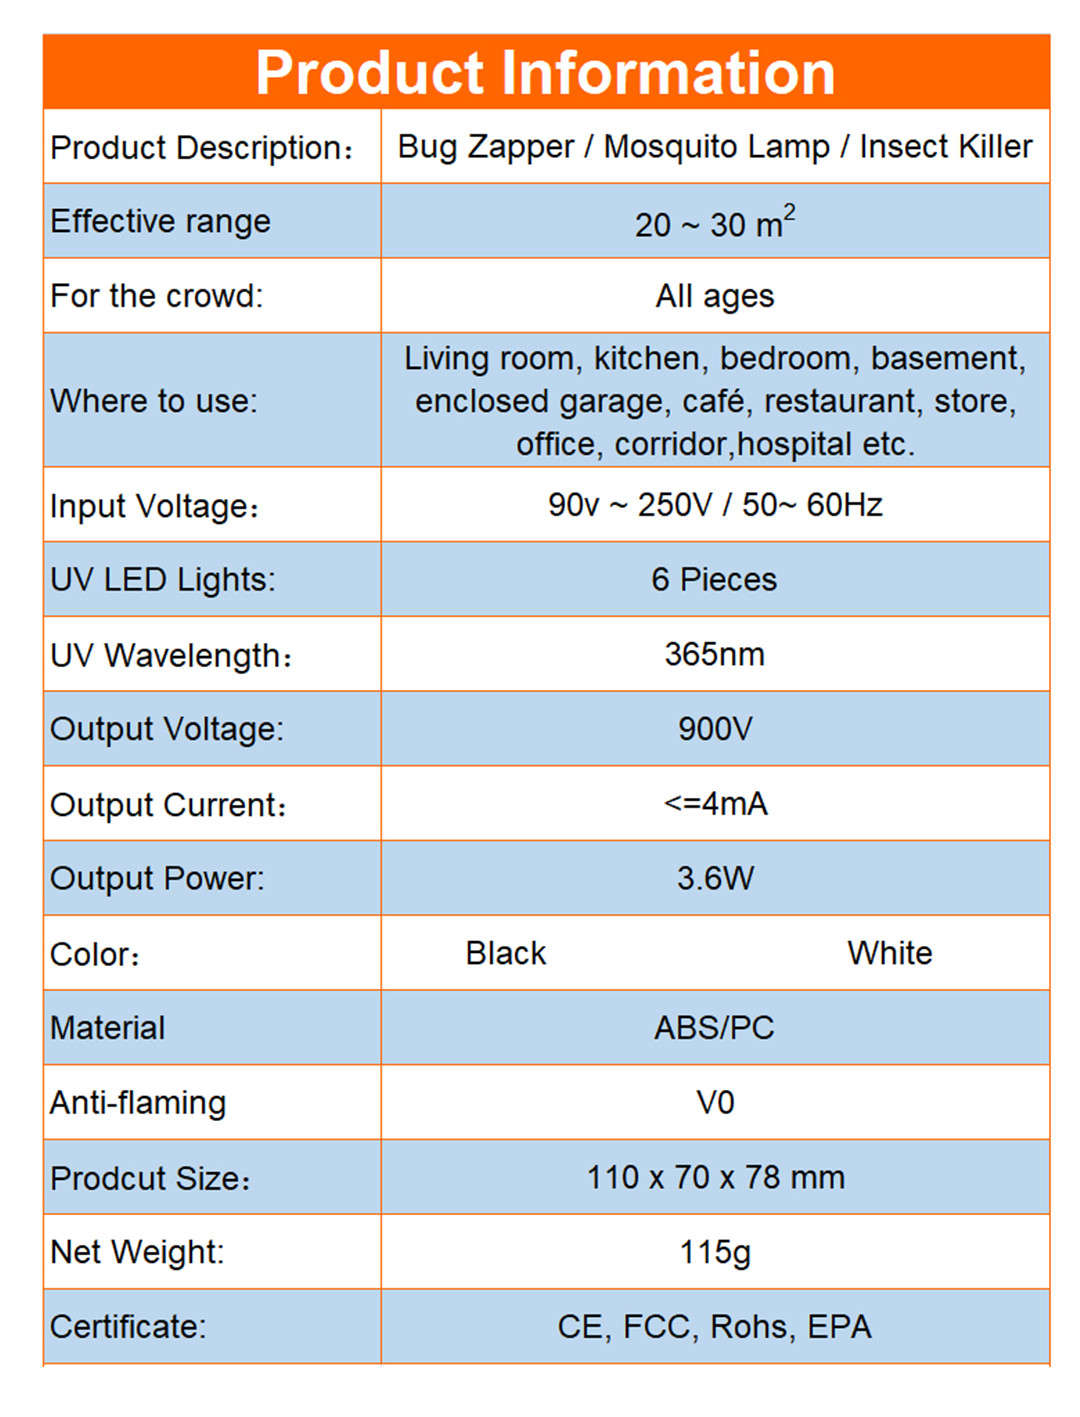 Amazon Hot Sale Ηλεκτρική λάμπα εξόντωσης κουνουπιών Έξι λαμπτήρες χάντρες μεγάλου μεγέθους Οικιακό πλαστικό πυρίμαχο υλικό (8)